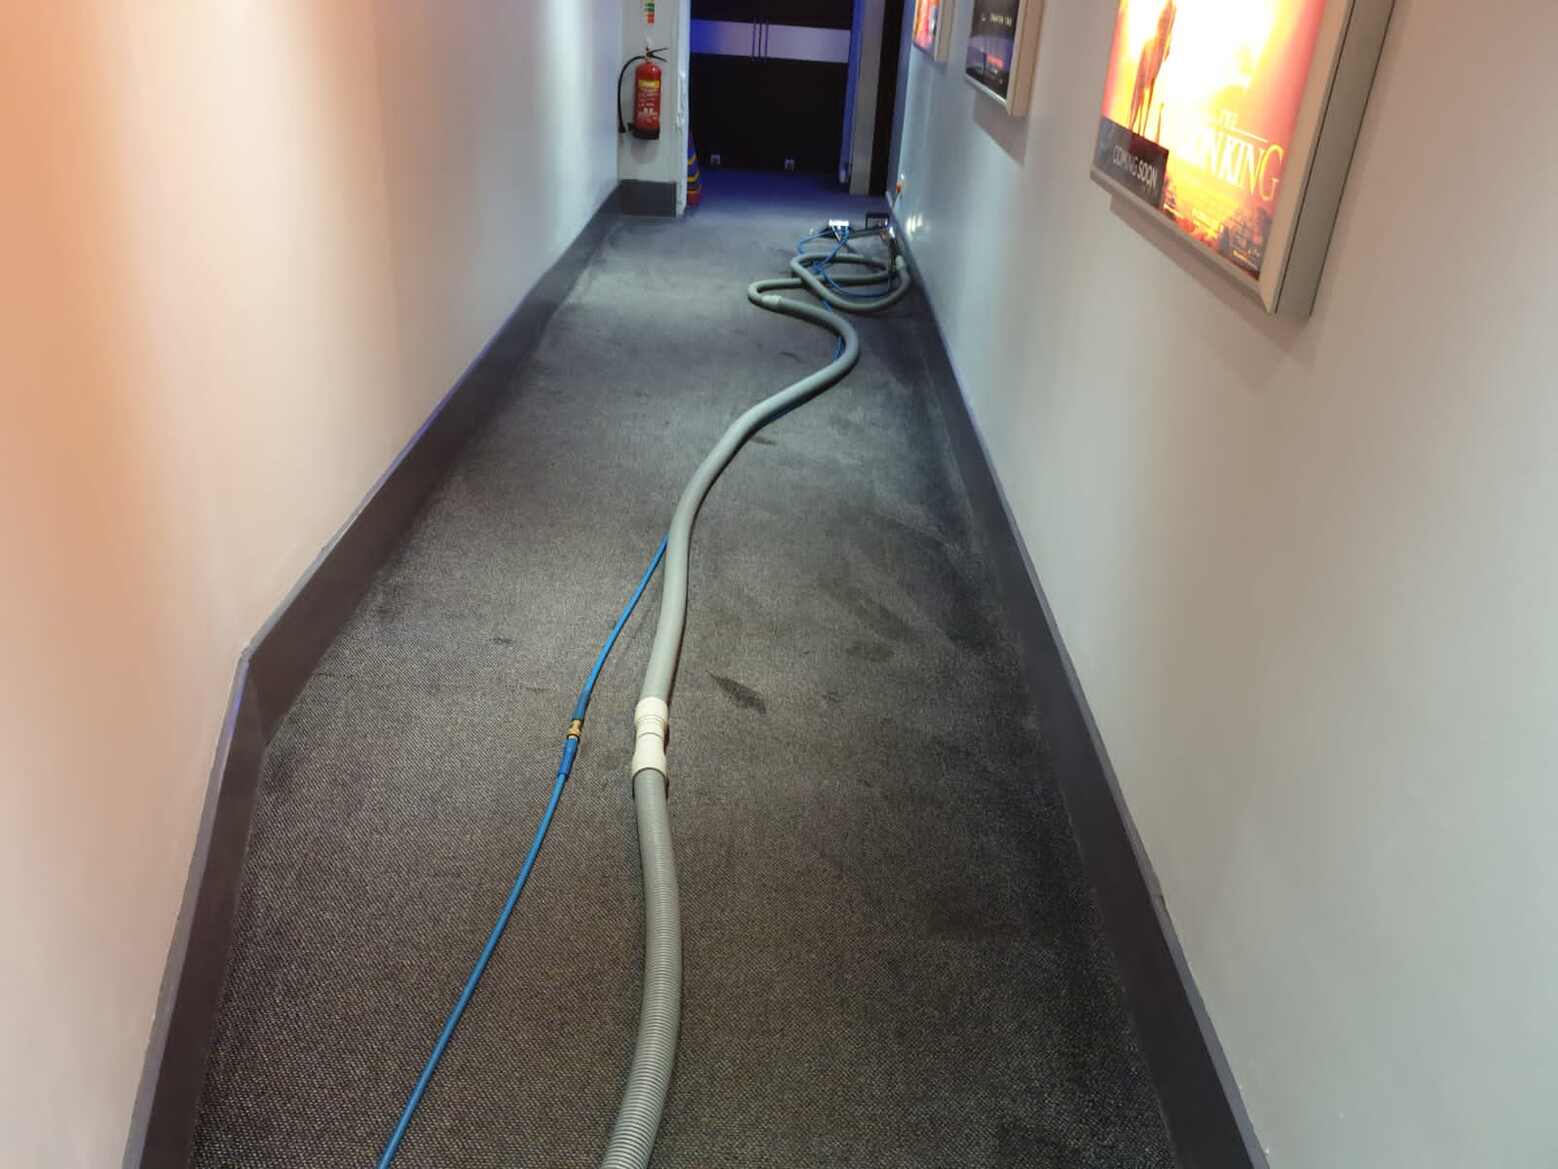 Cinema hallway carpet being washed